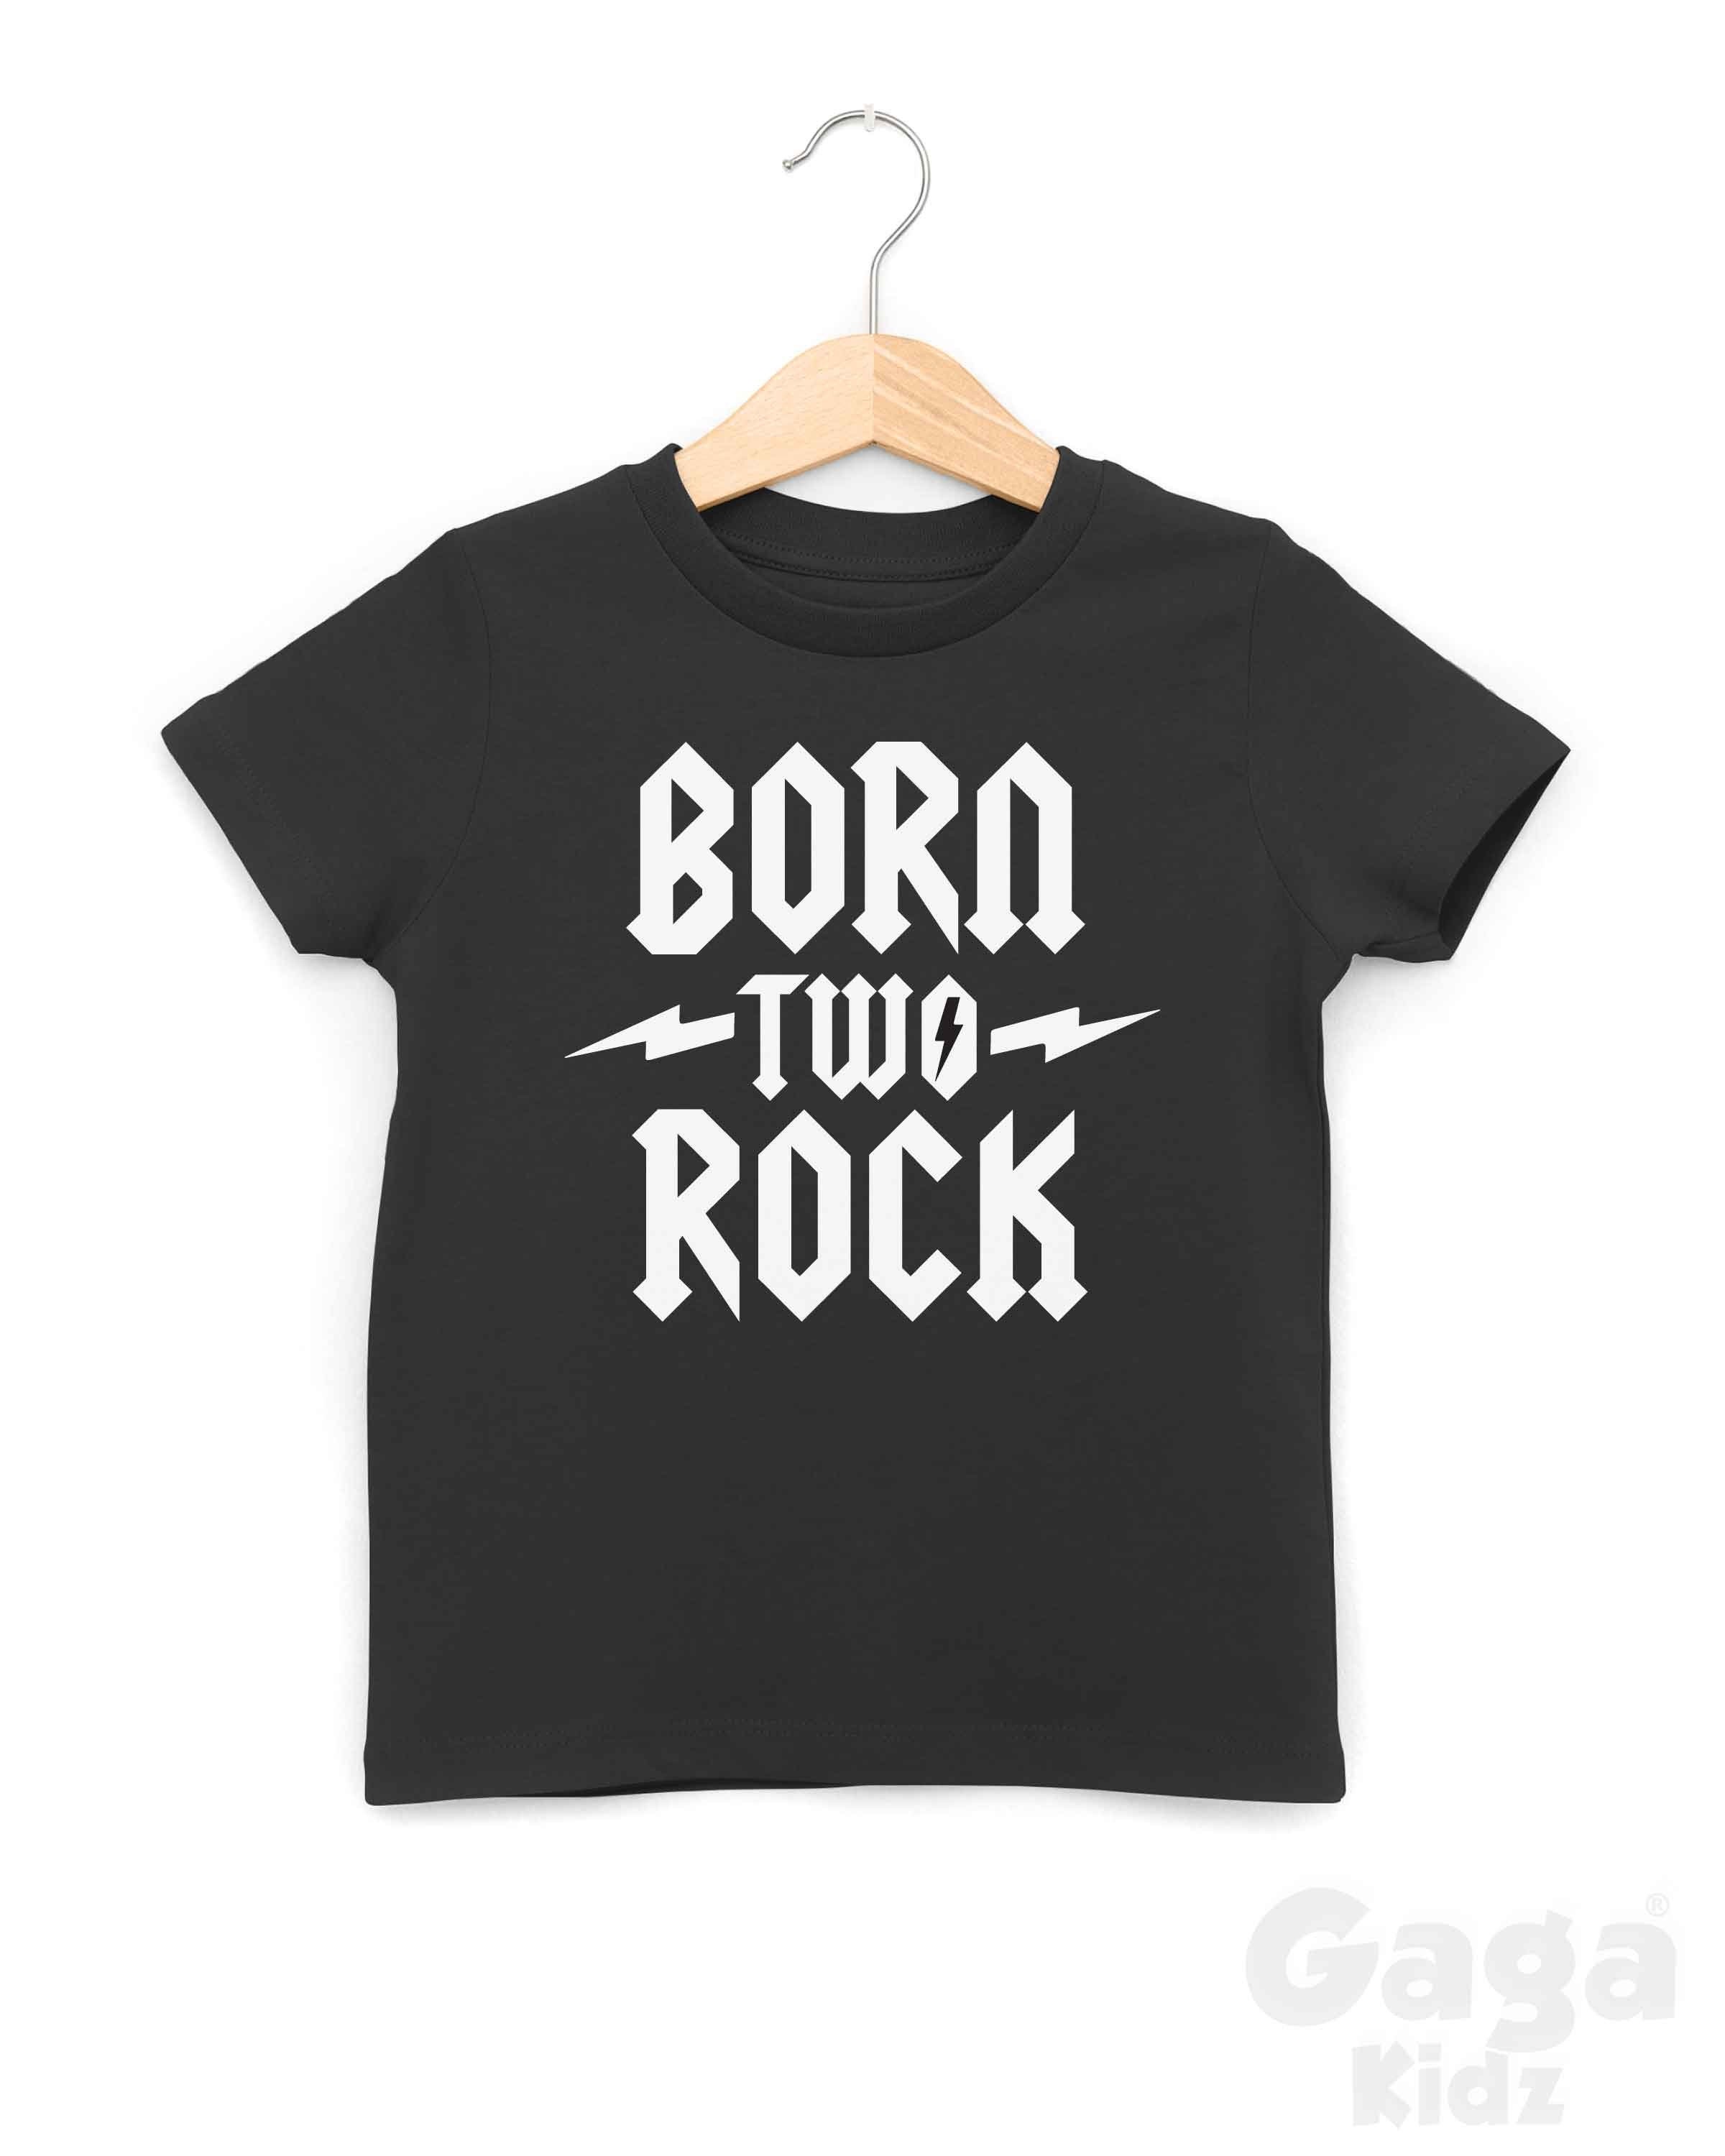 Kids Rock N Roll Rock Etsy T-shirt, Toddler Heavy Metal Born Two -